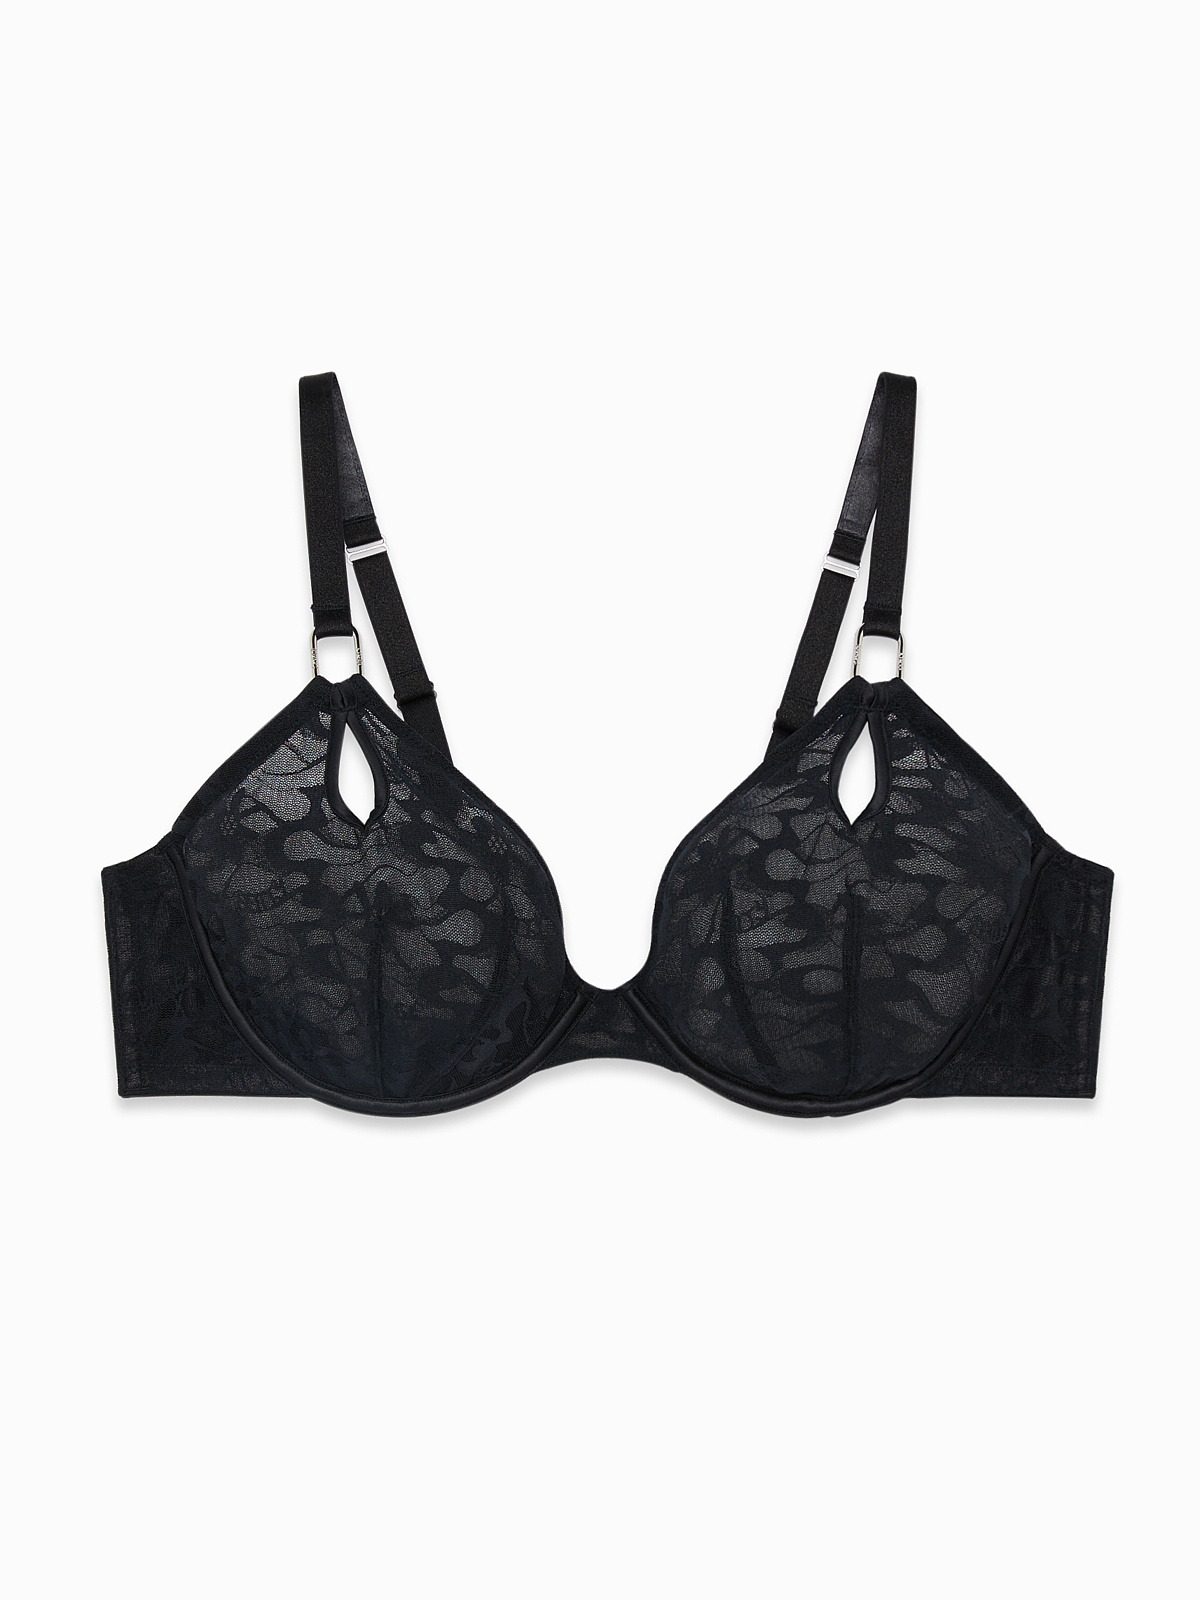 ♧ Cacique Black Lace Lined Underwire Bra Size 40DD